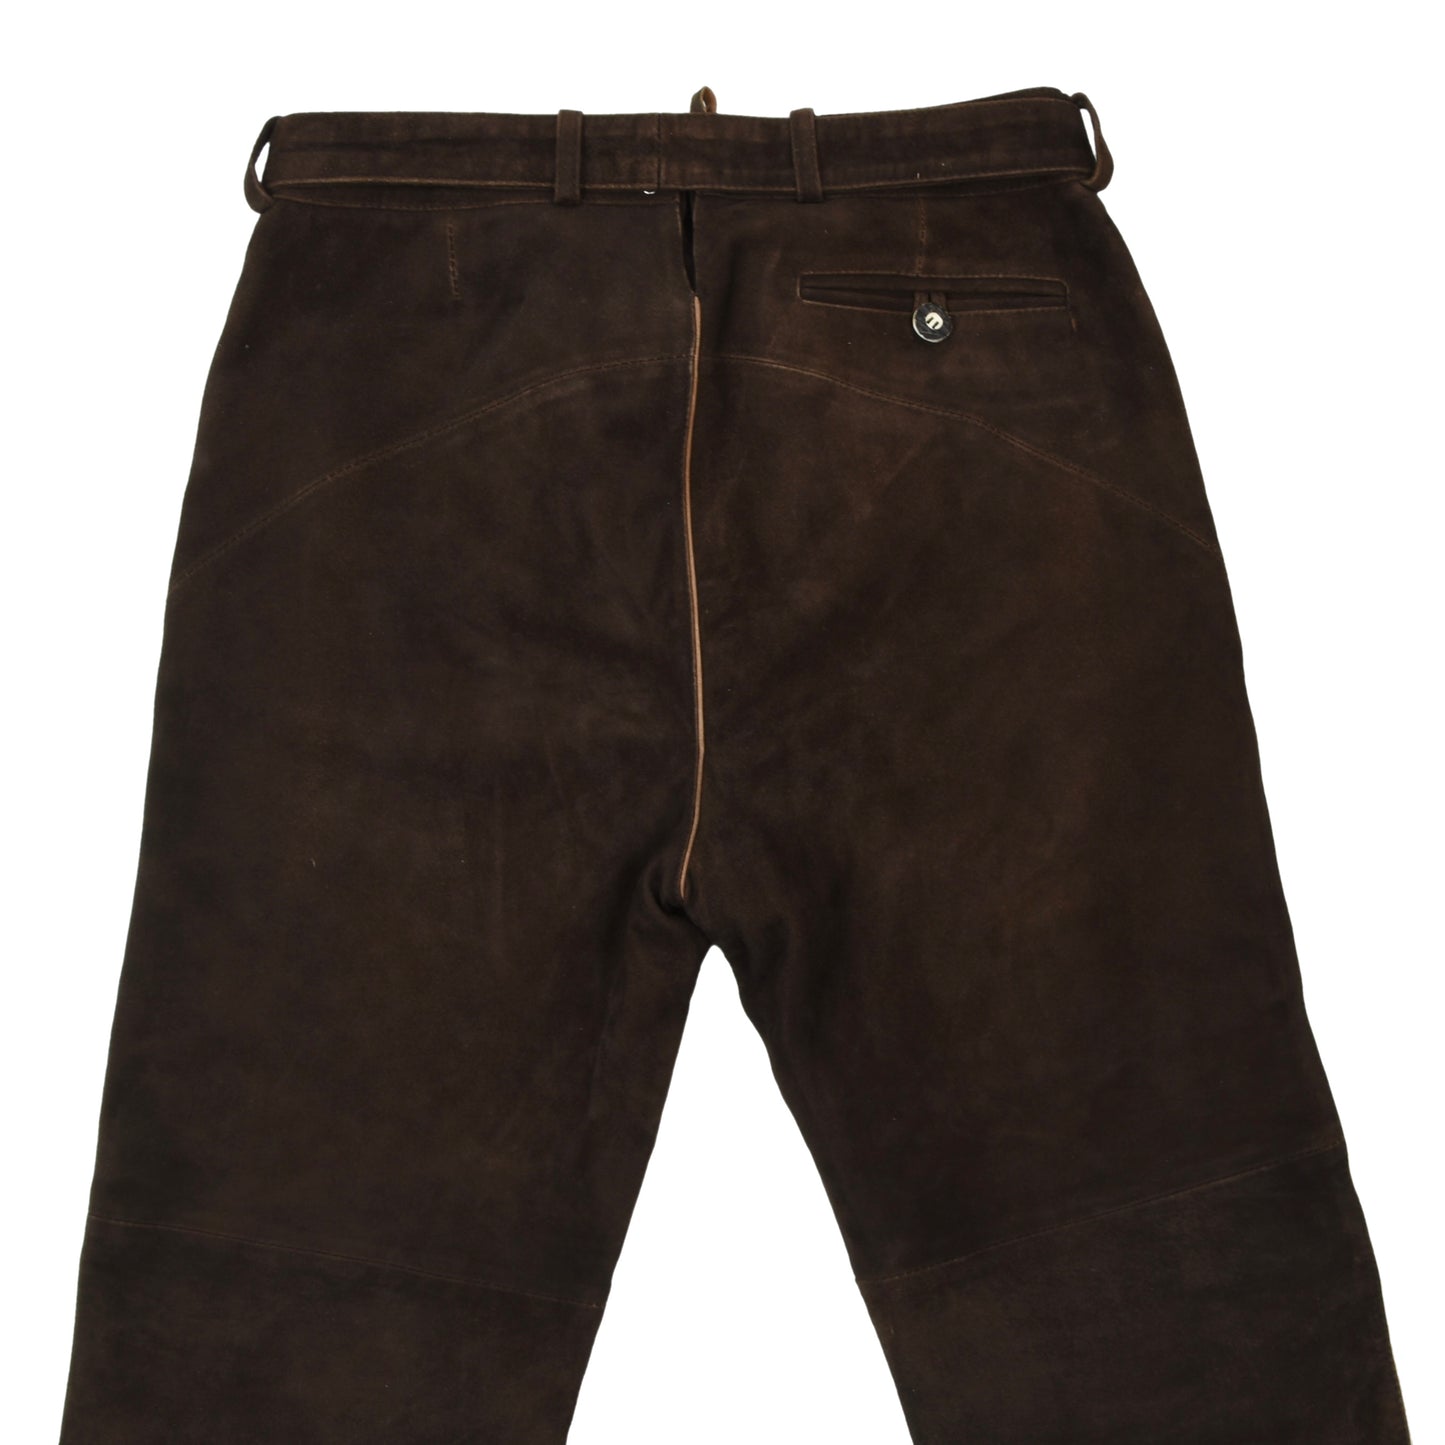 Weinbauer Suede Lederhose/Pants Size 24 - Brown